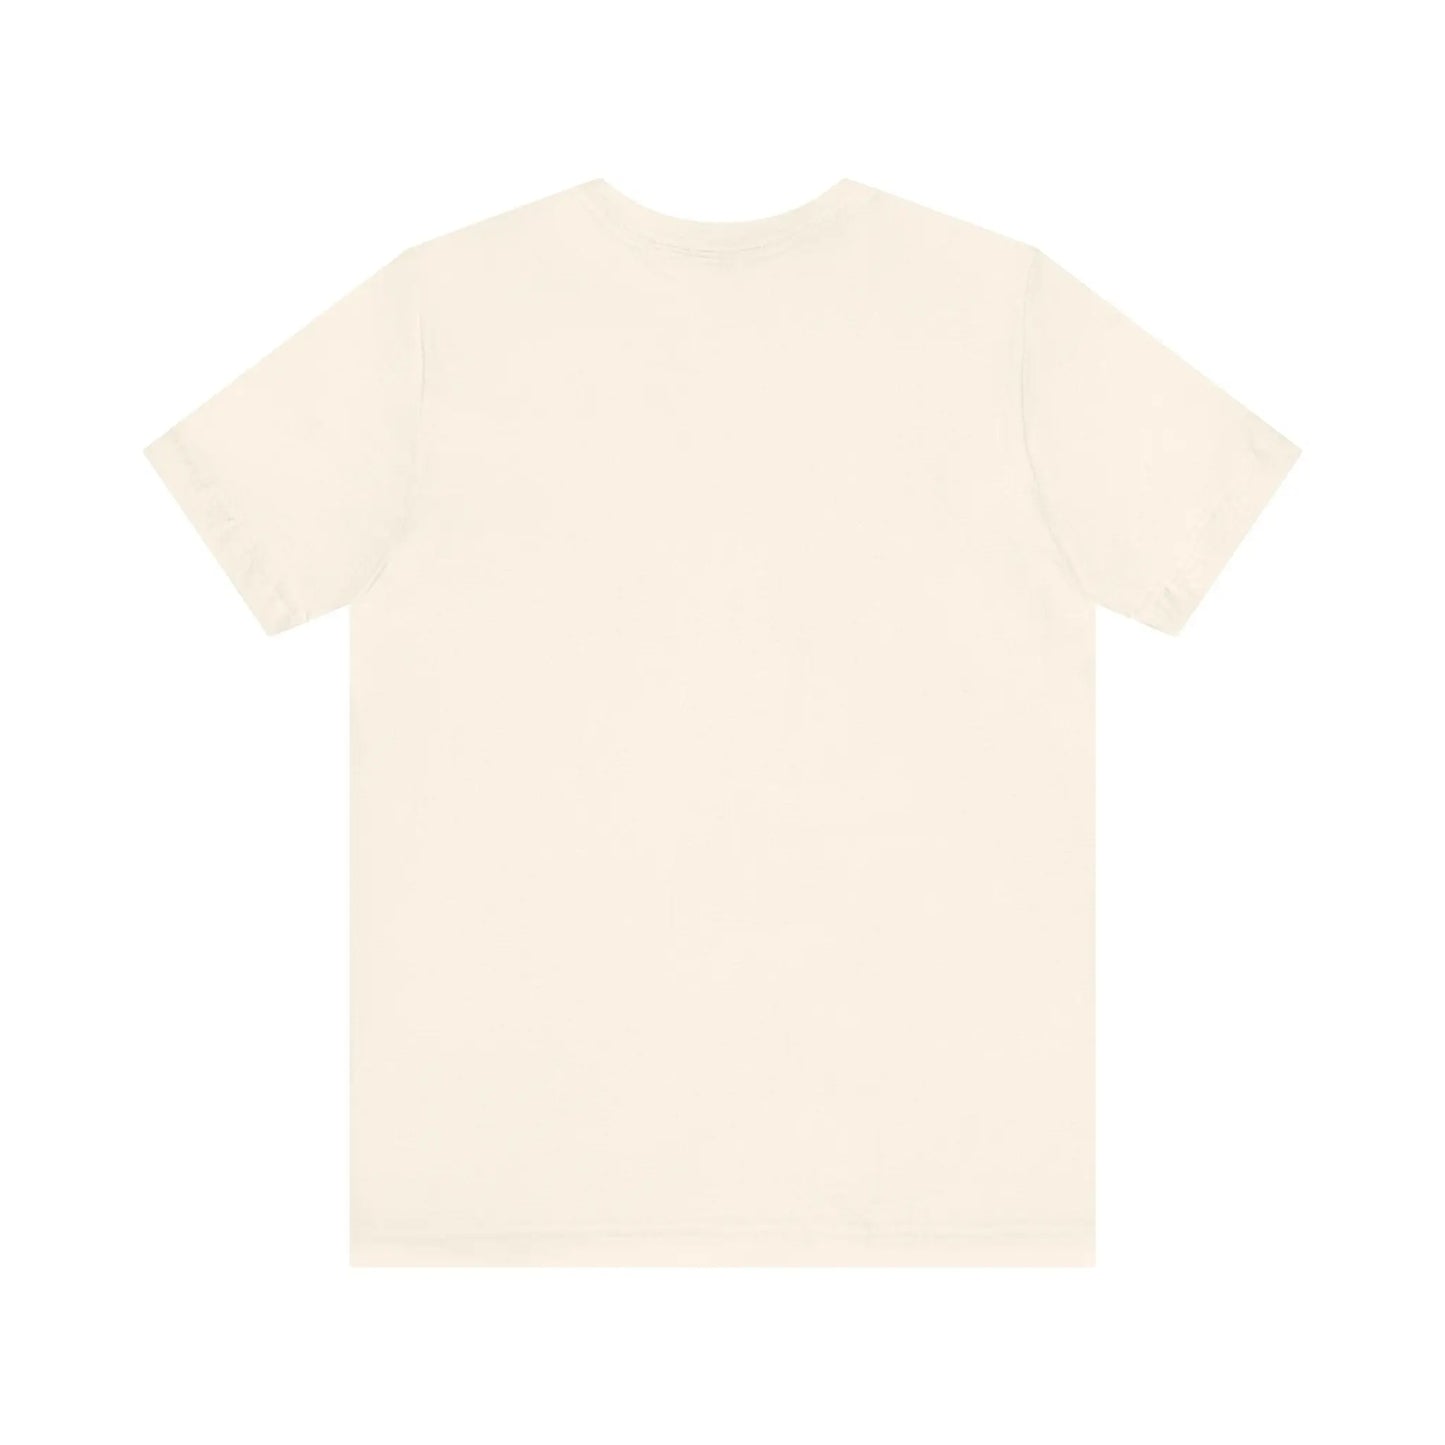 Be Real T-Shirt Printify Pikolelie (pee-koh-lay-lee) Activewear T-Shirt